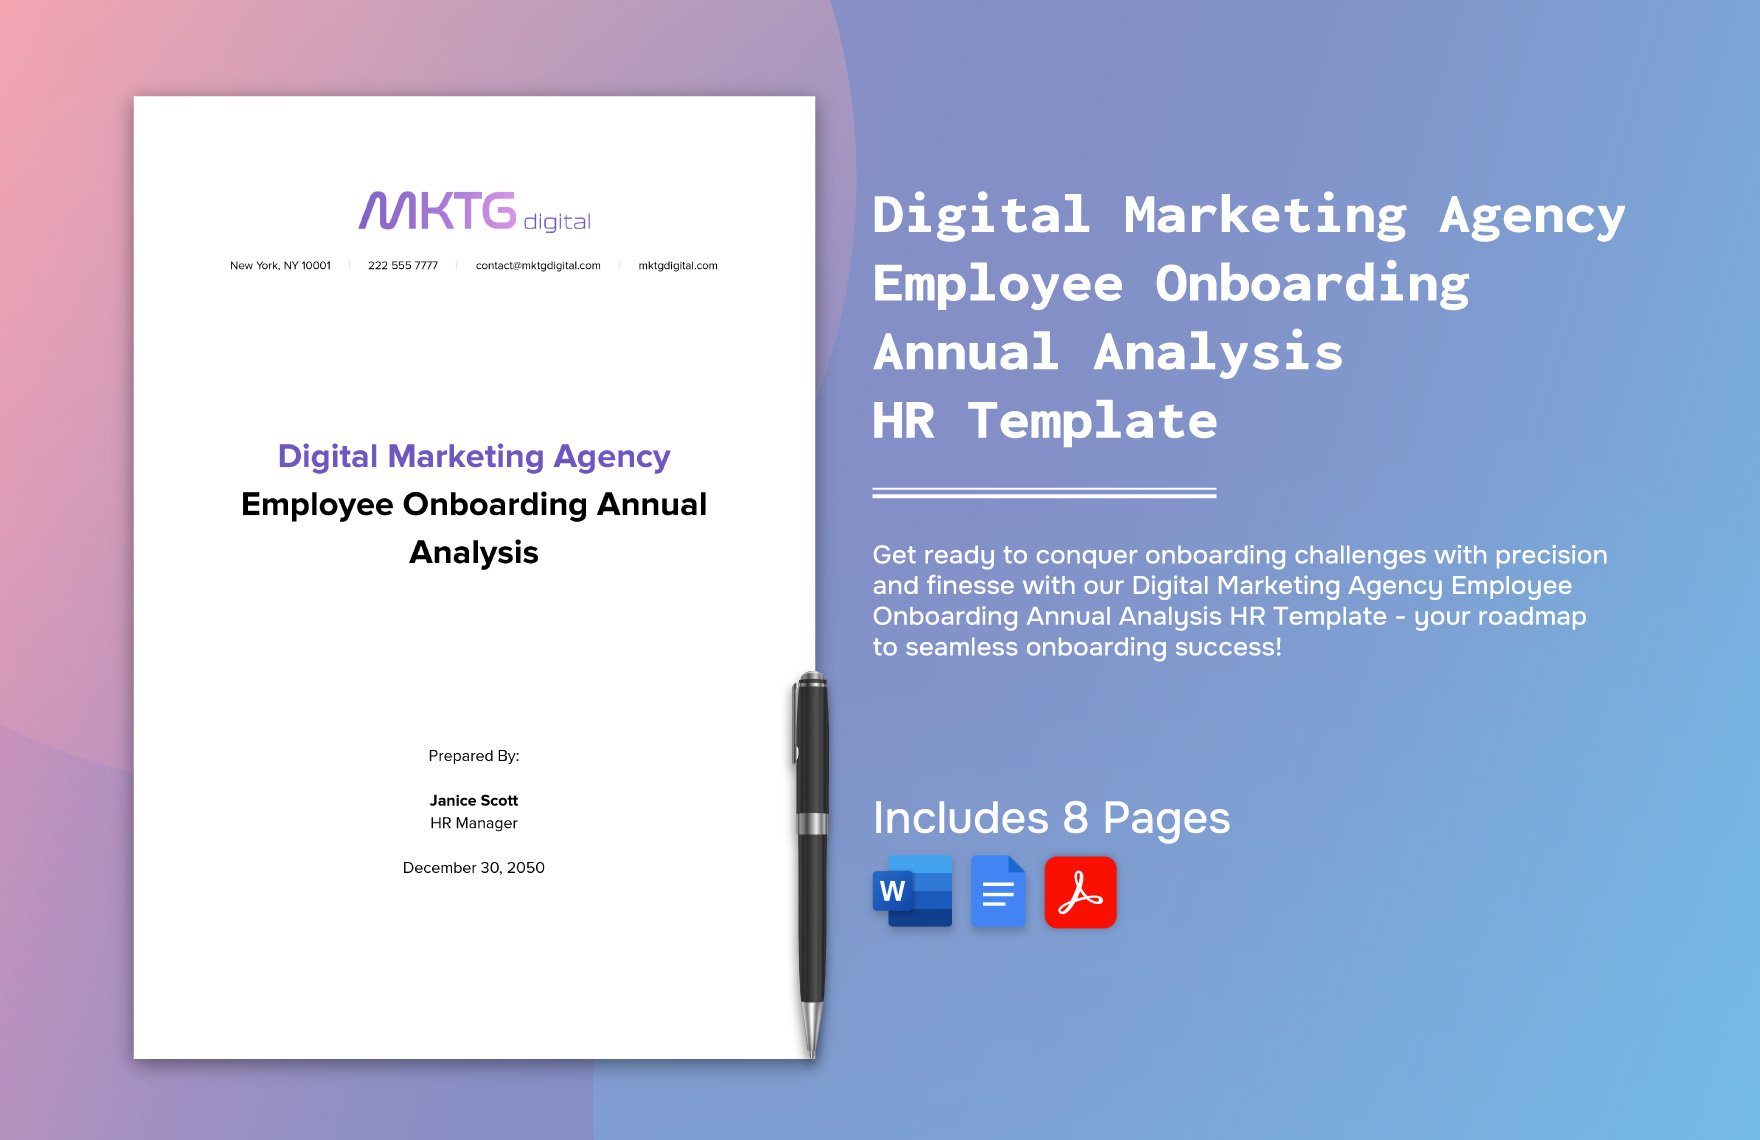 Digital Marketing Agency Employee Onboarding Annual Analysis HR Template